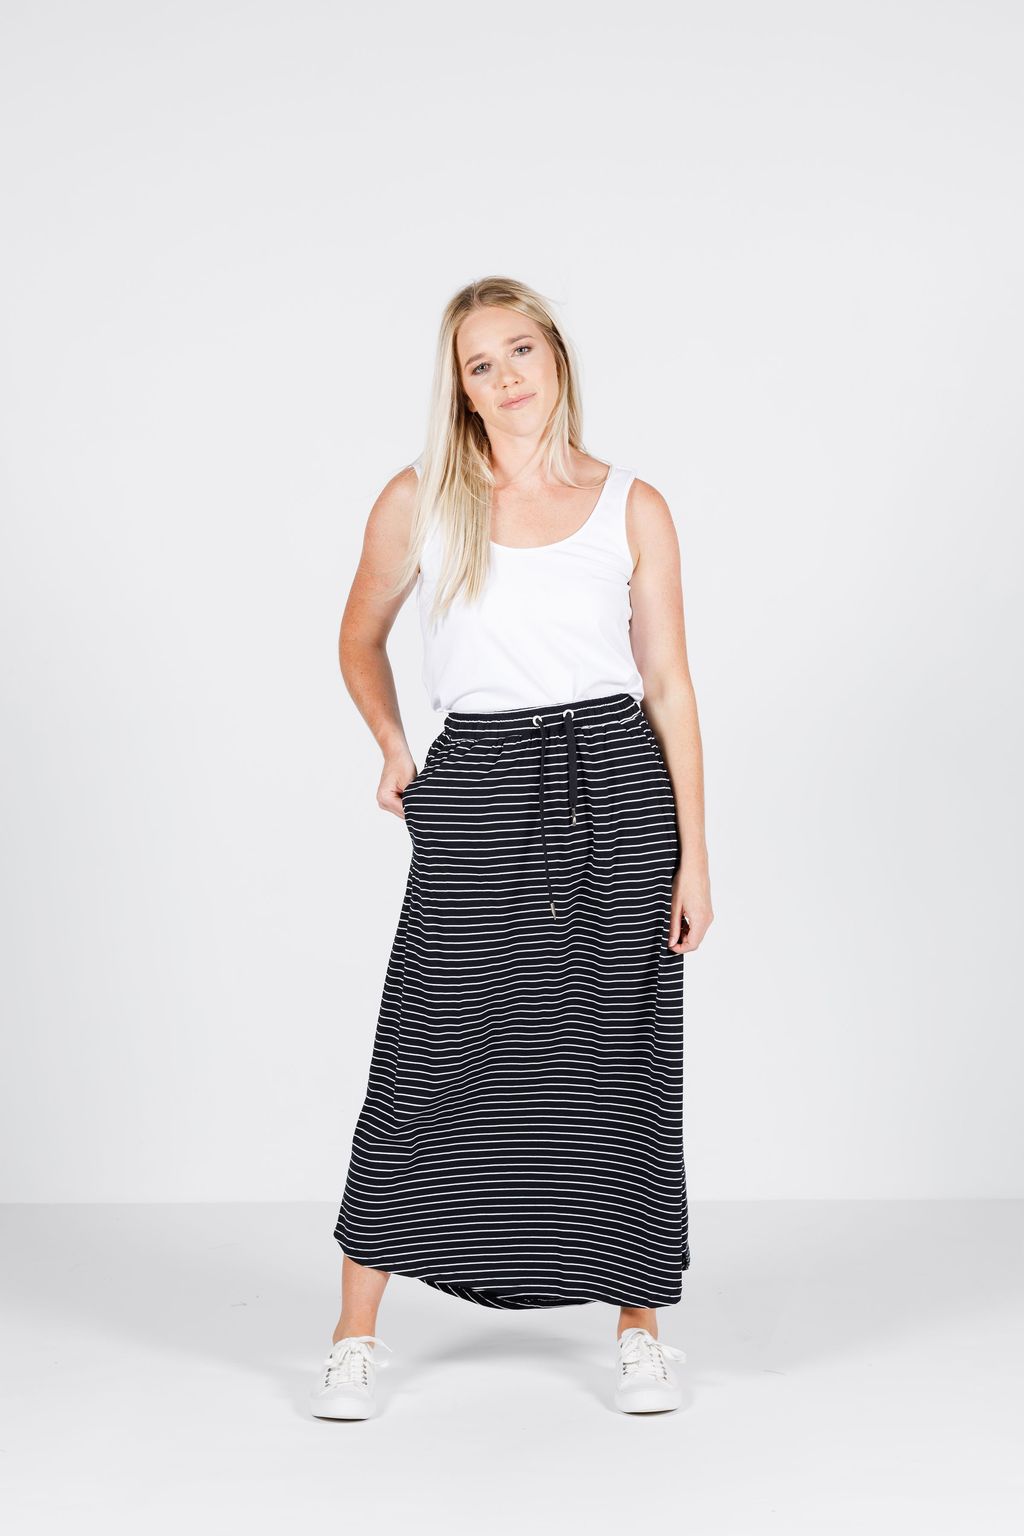 Home Lee Maxi Skirt Black and White Stripes